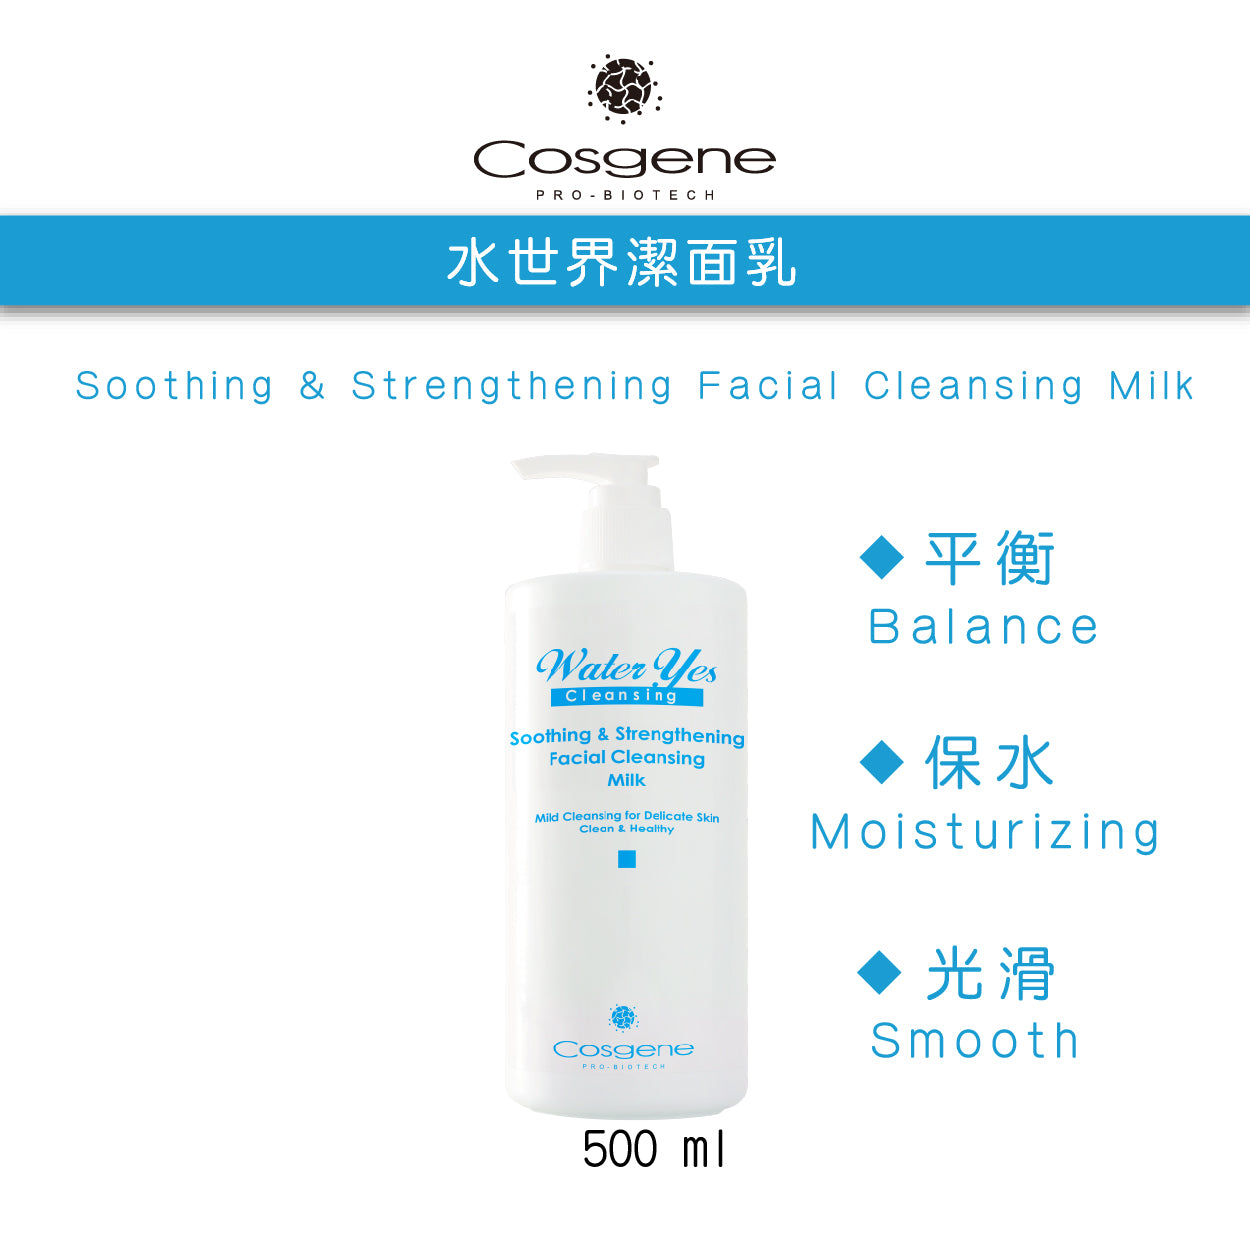 【COSGENE】Soothing & Strengthening Facial Cleansing Milk